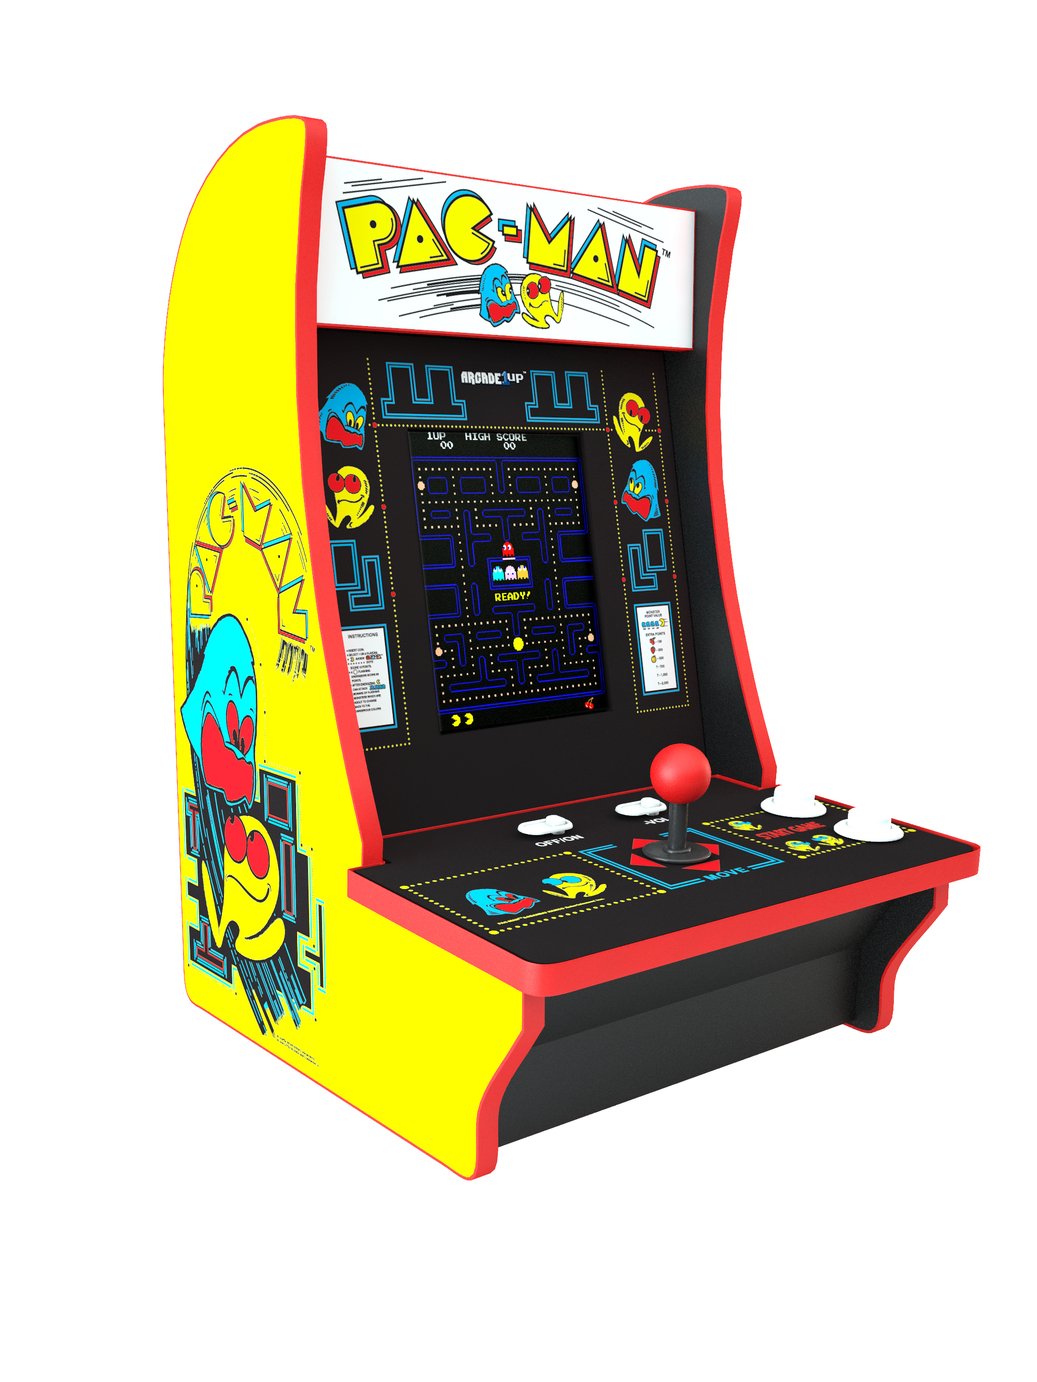 Arcade1Up Pacman Countercade Review